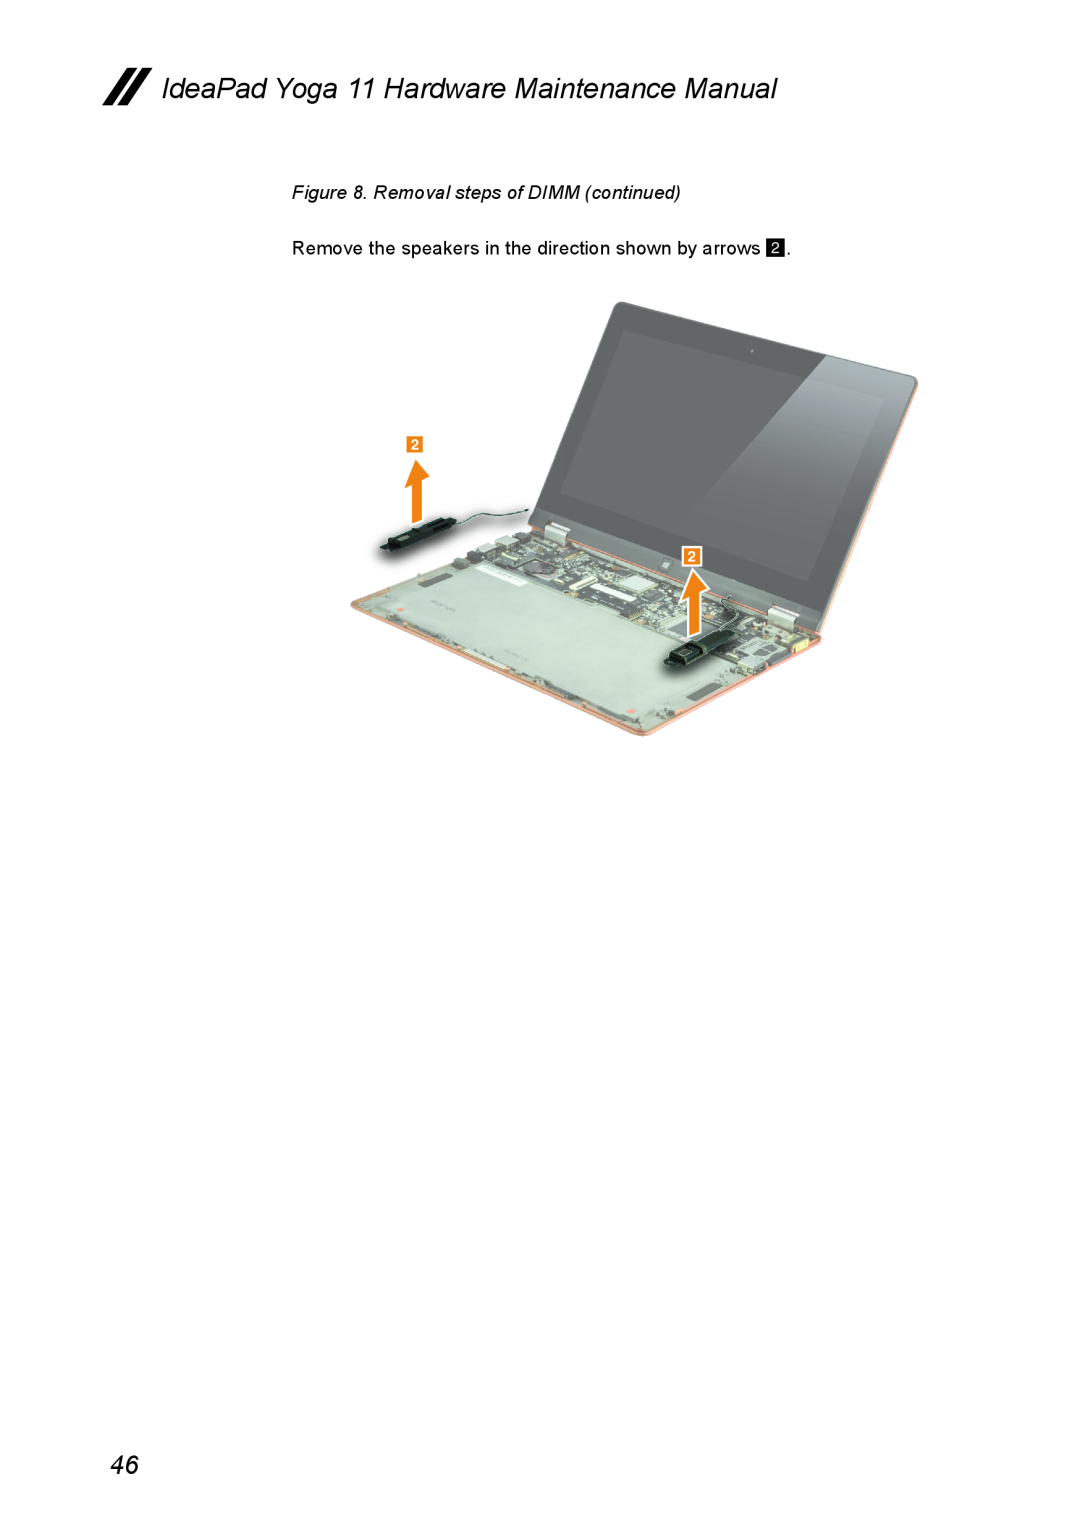 Lenovo manual Removal steps of DIMM continued, IdeaPad Yoga 11 Hardware Maintenance Manual 